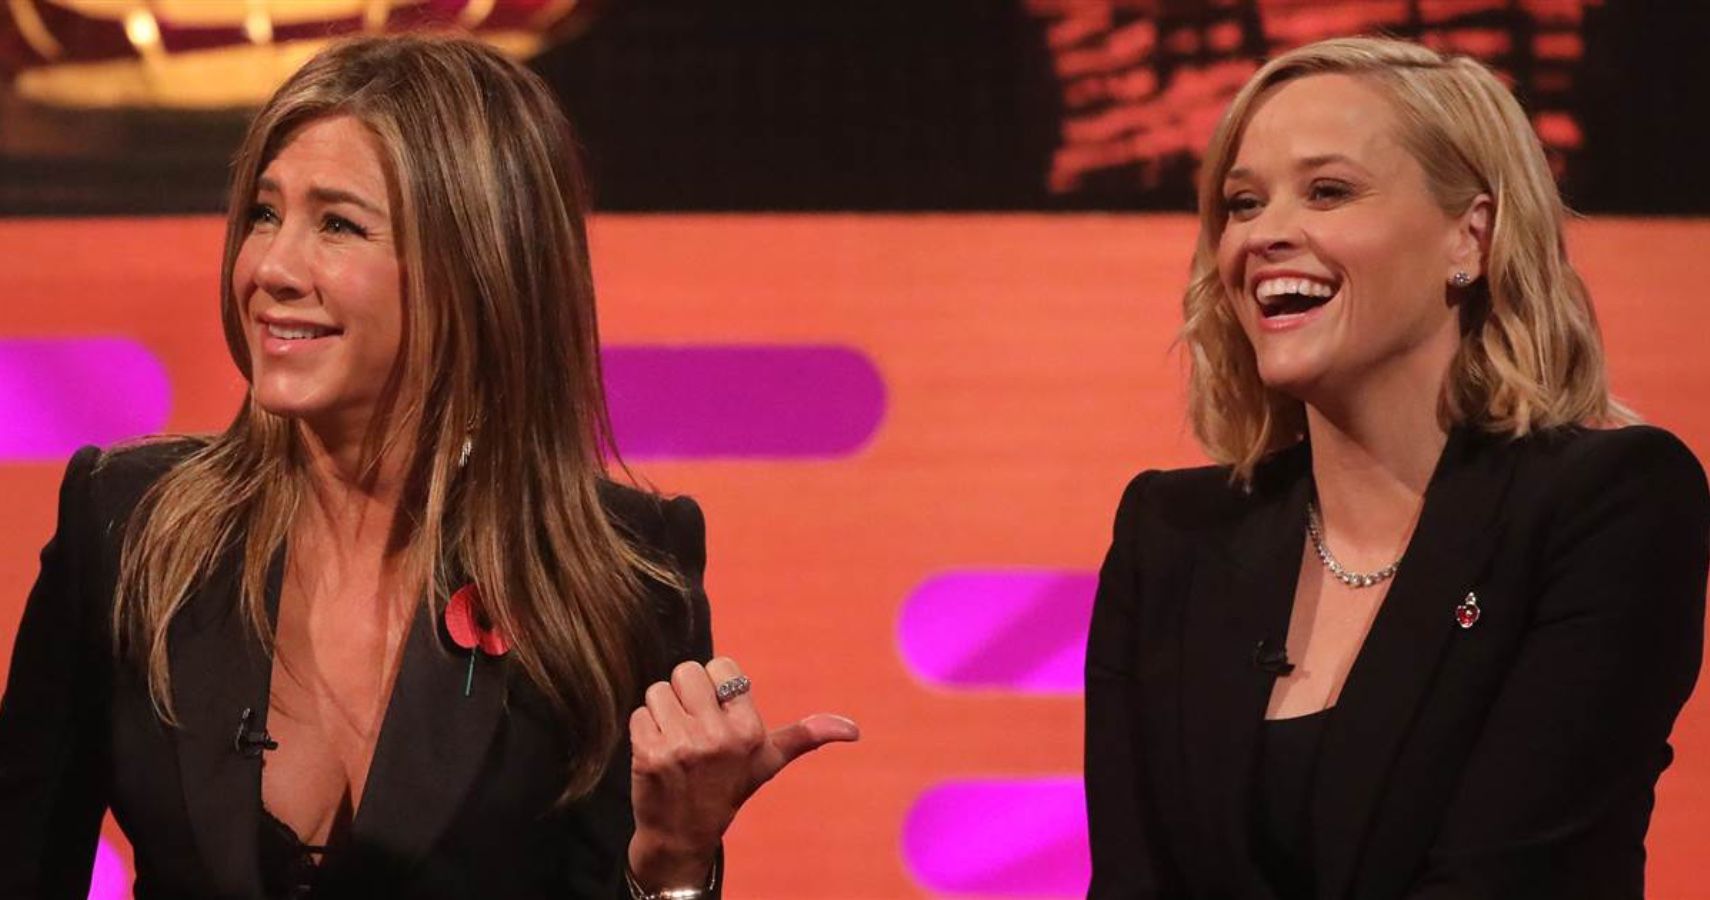 Reese Witherspoon compartilha clipe do BTS com Jennifer Aniston no set de 'The Morning Show'